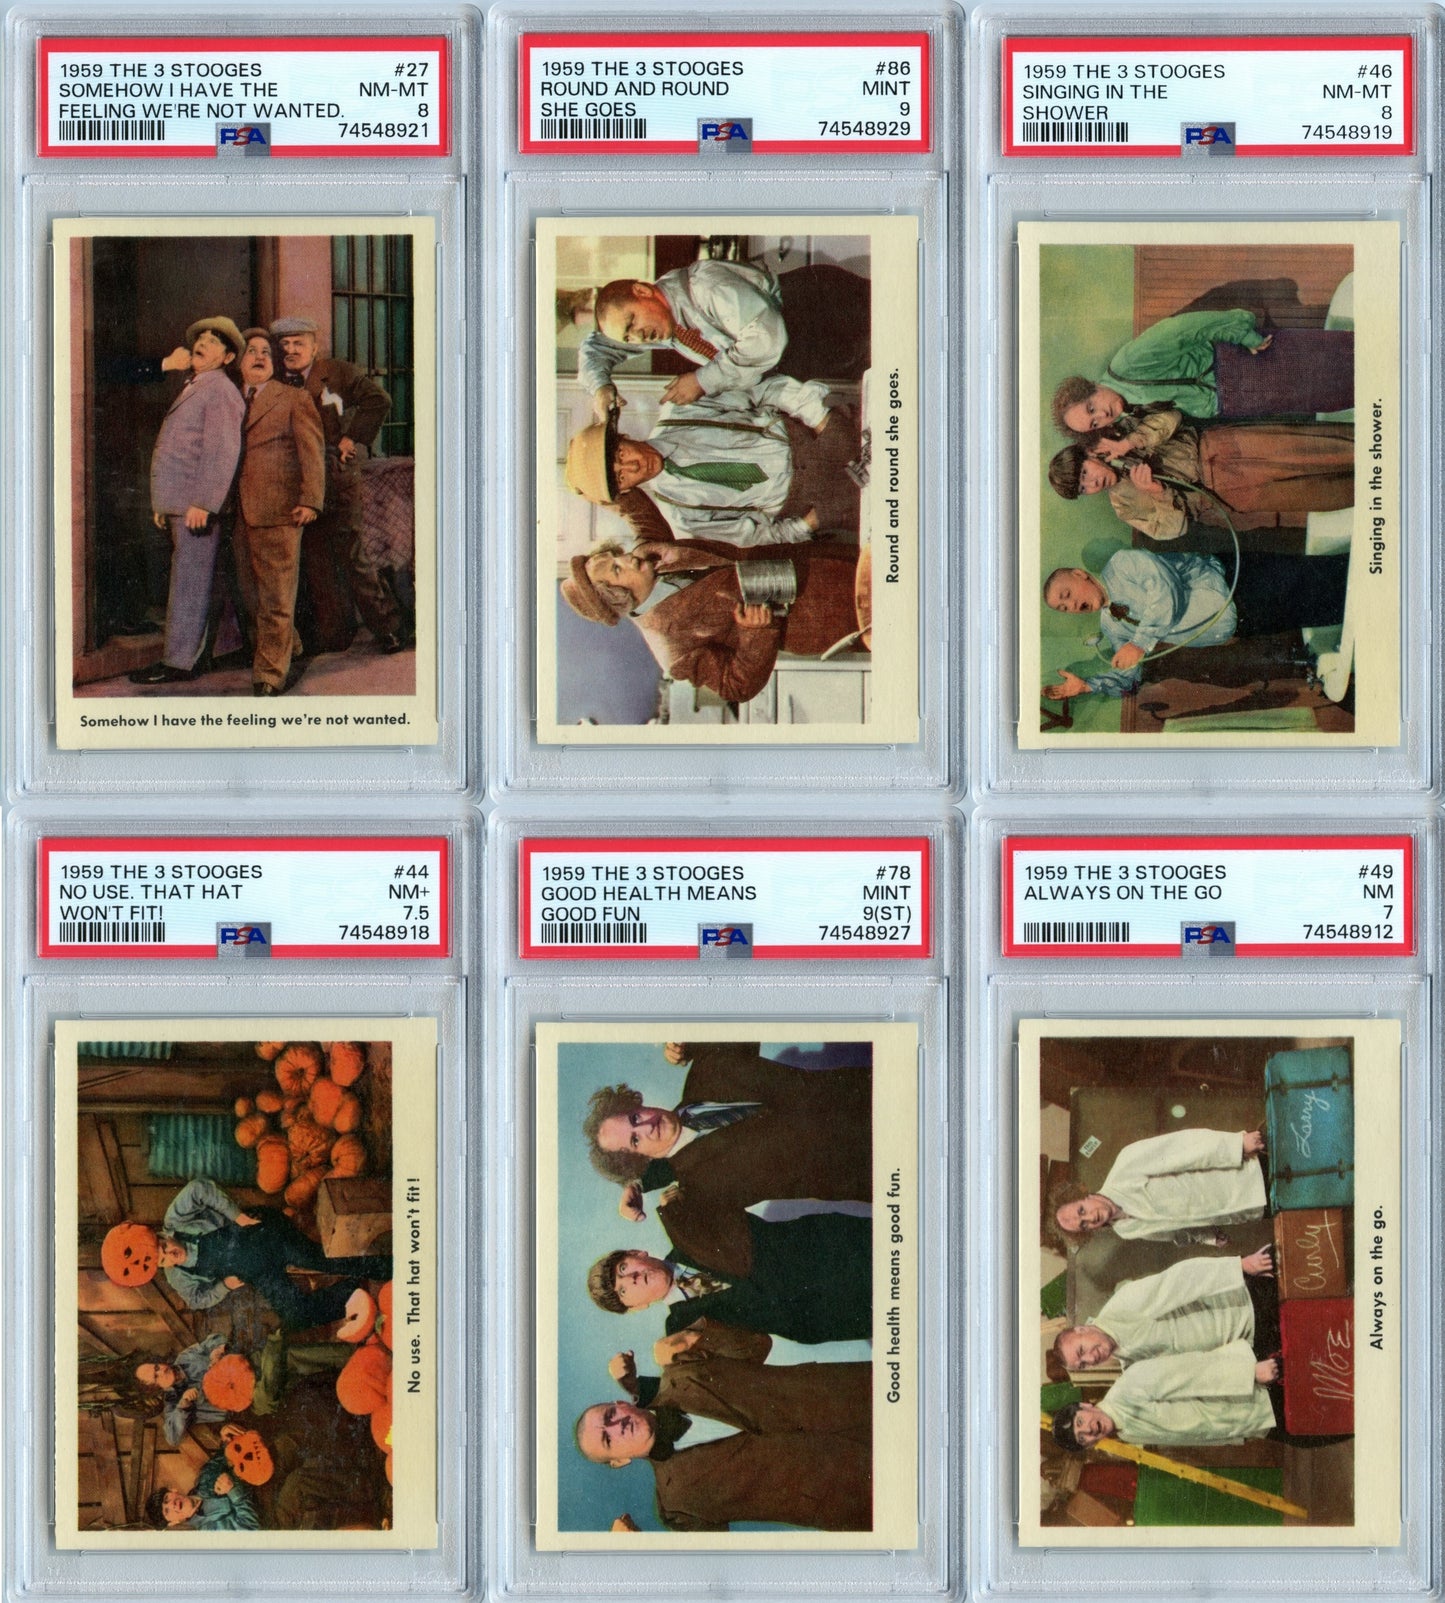 1959 Fleer The 3 Stooges Super High Grade Complete Set Break 96 Spot Random Card (Moe PSA 9, Larry PSA 6, Curly PSA 4, #77 PSA 10, etc)